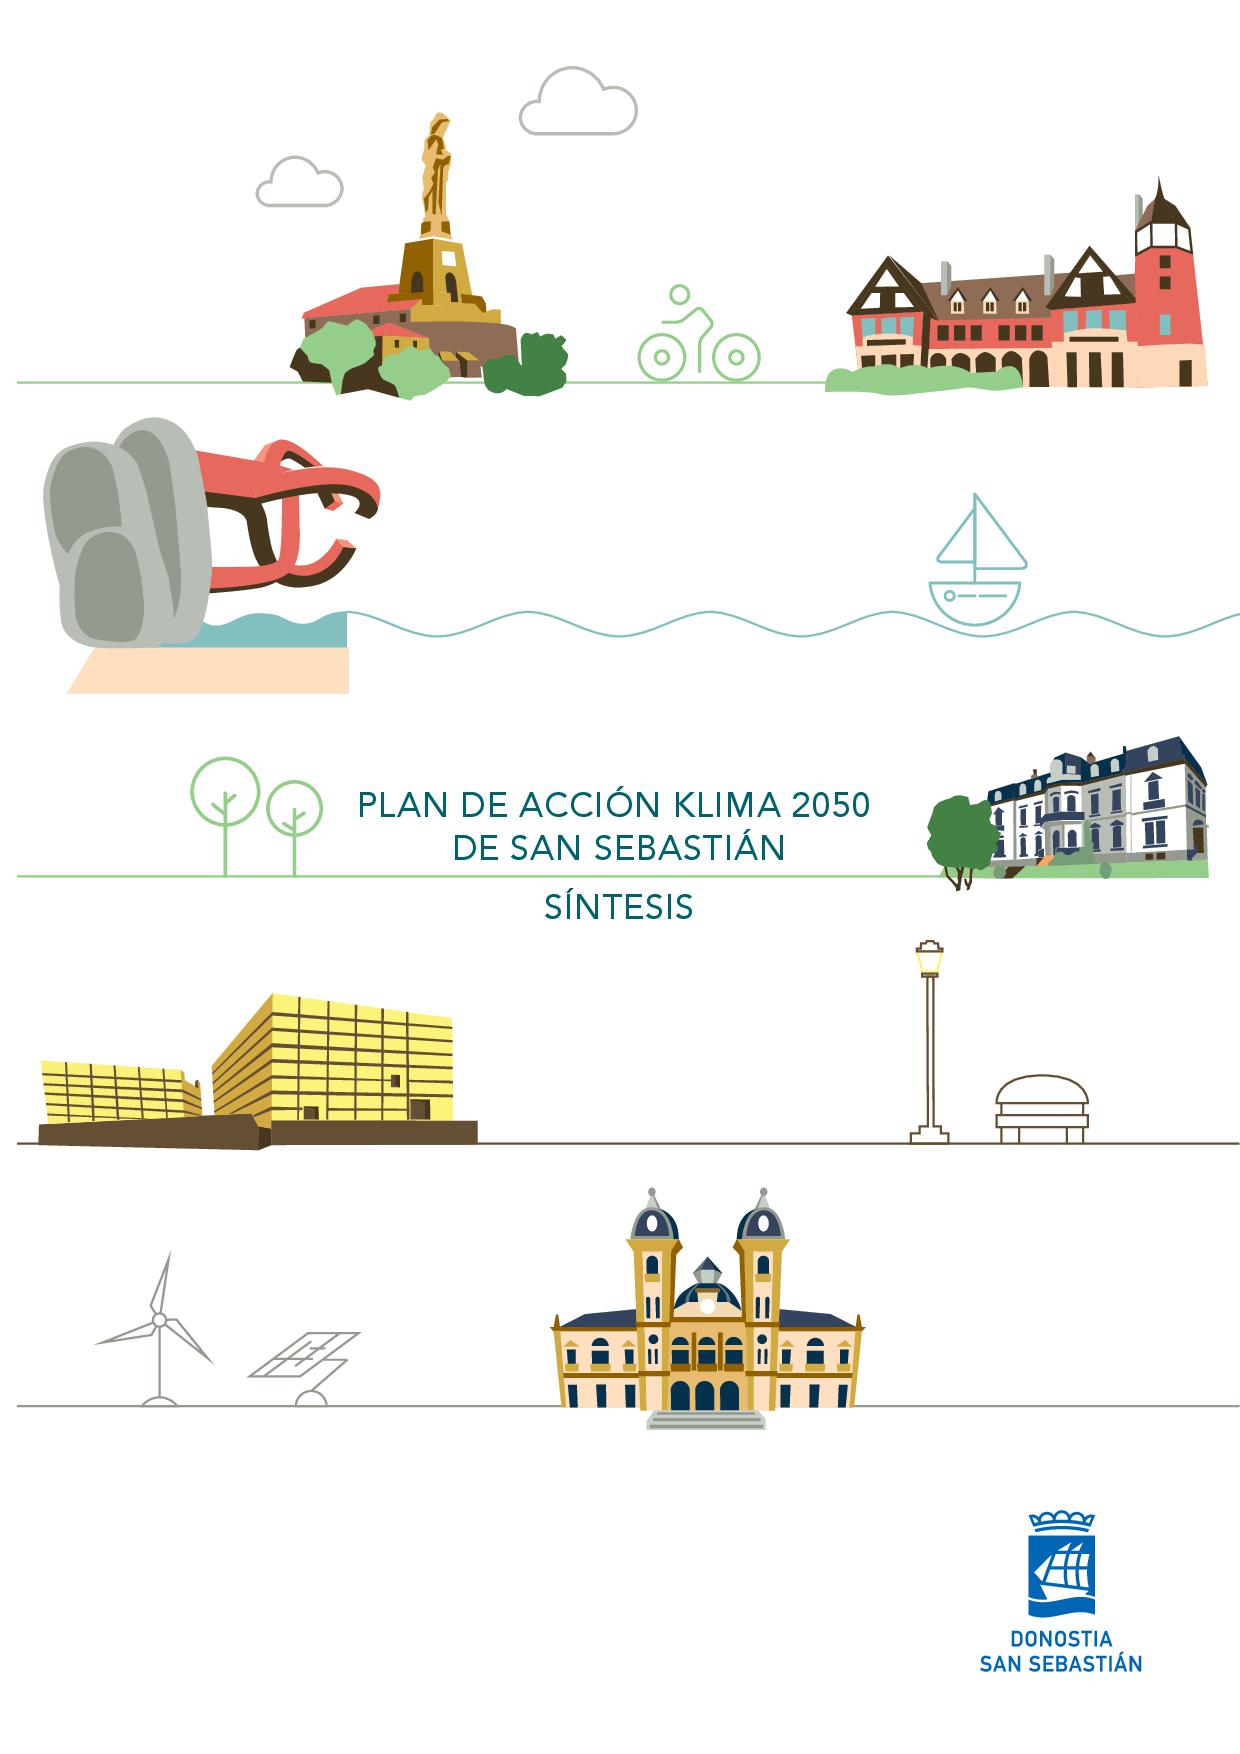 Plan de acción klima 2050 de San Sebastián síntesis